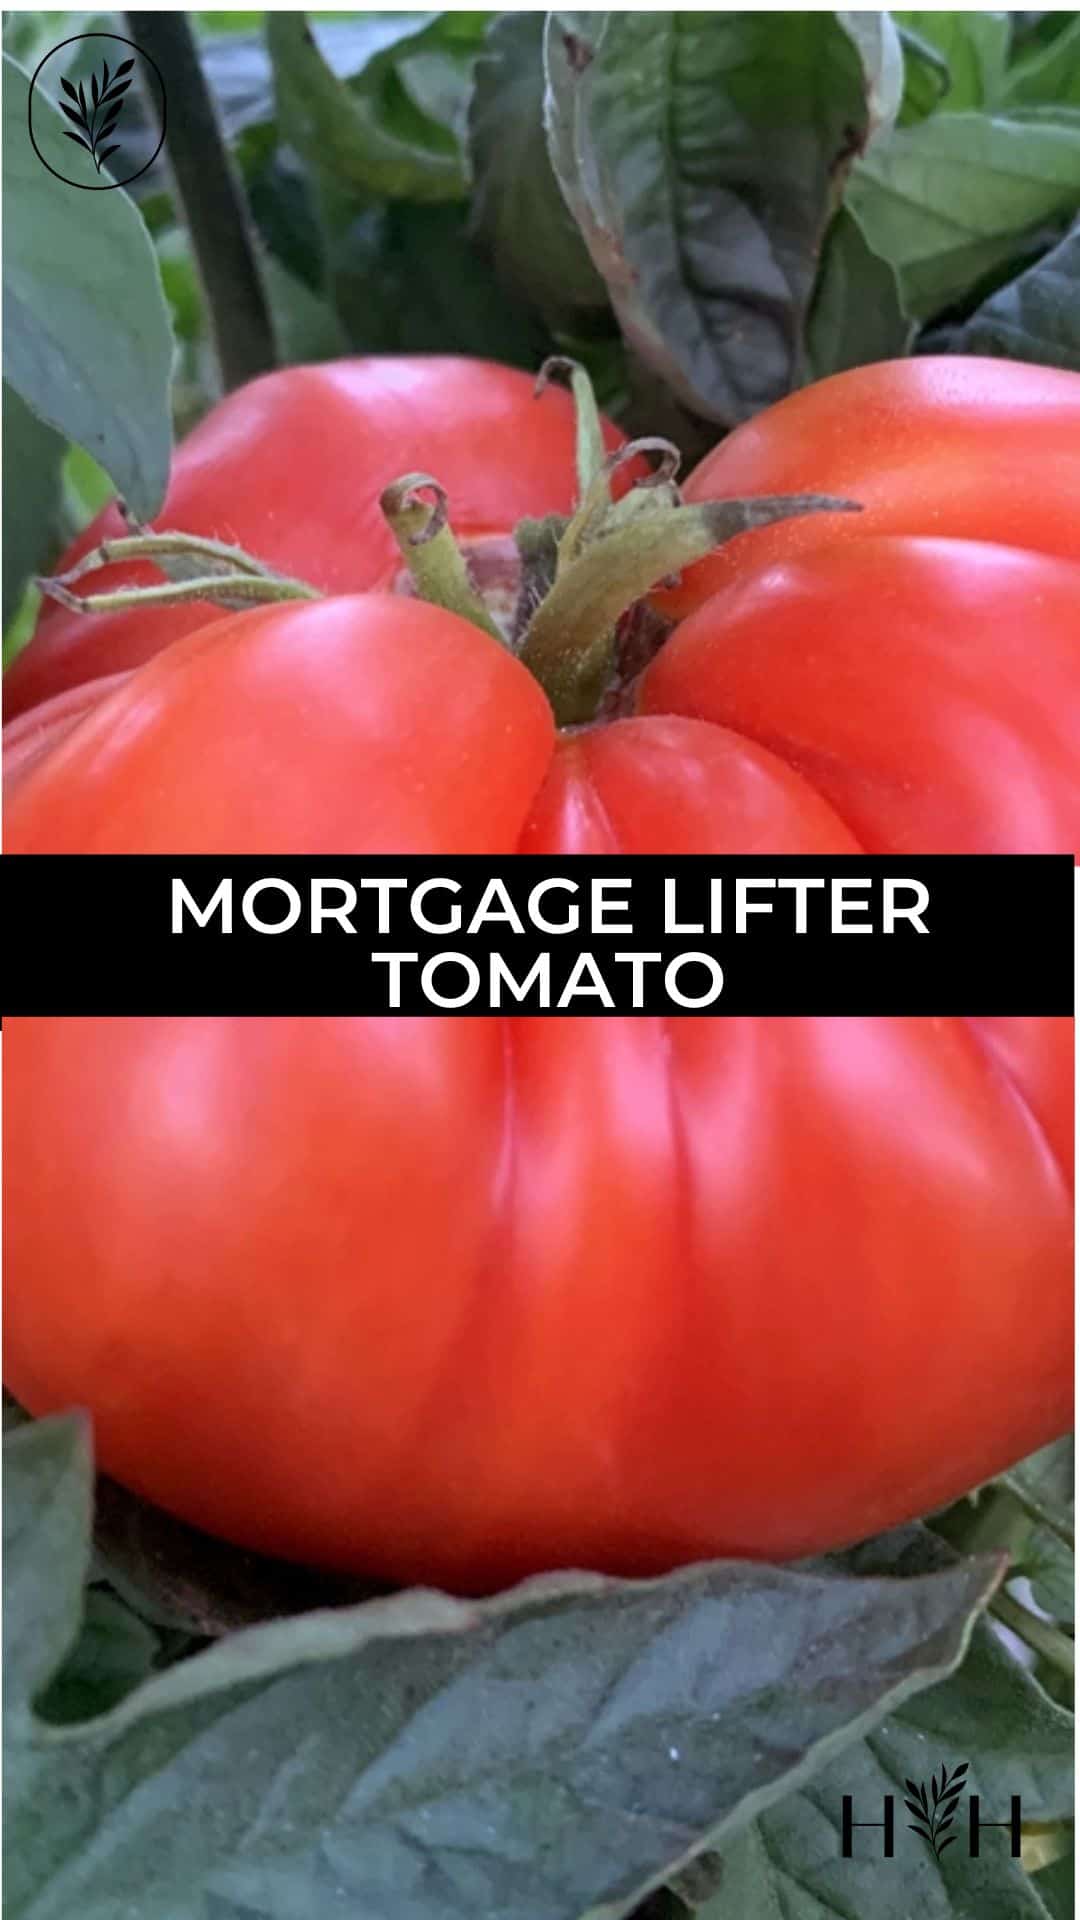 Mortgage lifter tomato via @home4theharvest